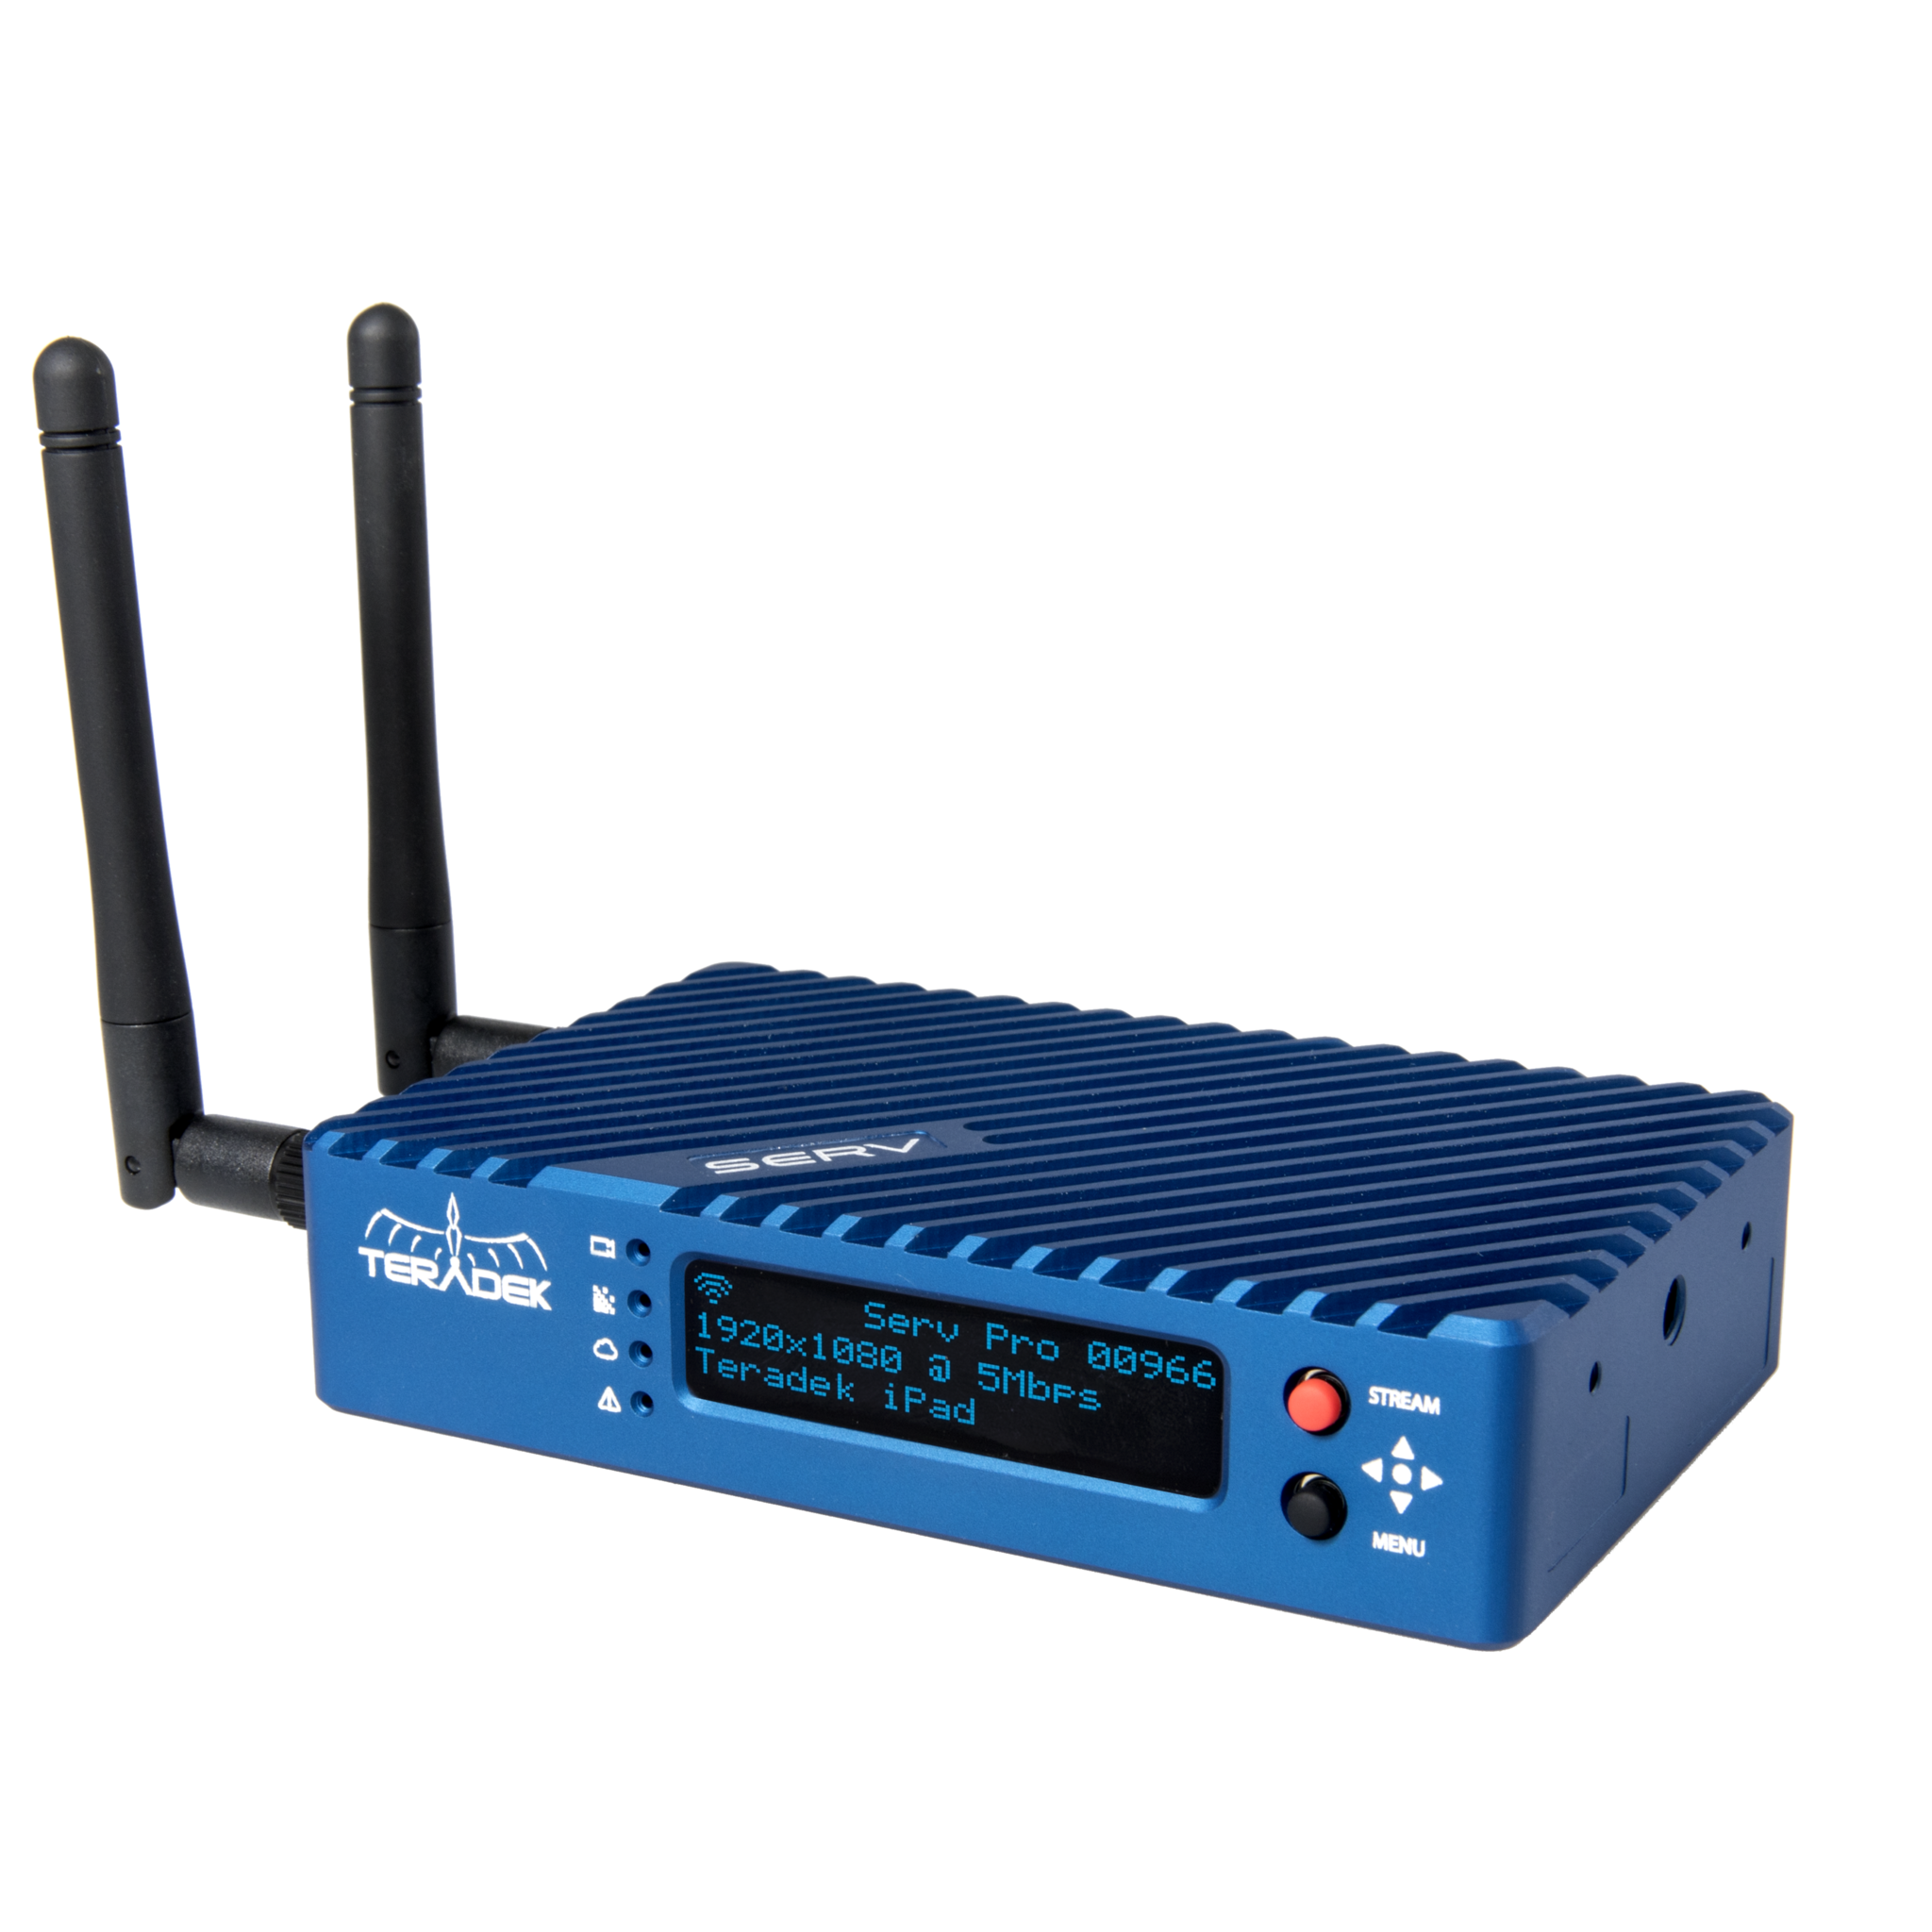 Teradek Serv Pro Wireless Monitor Stock Photo